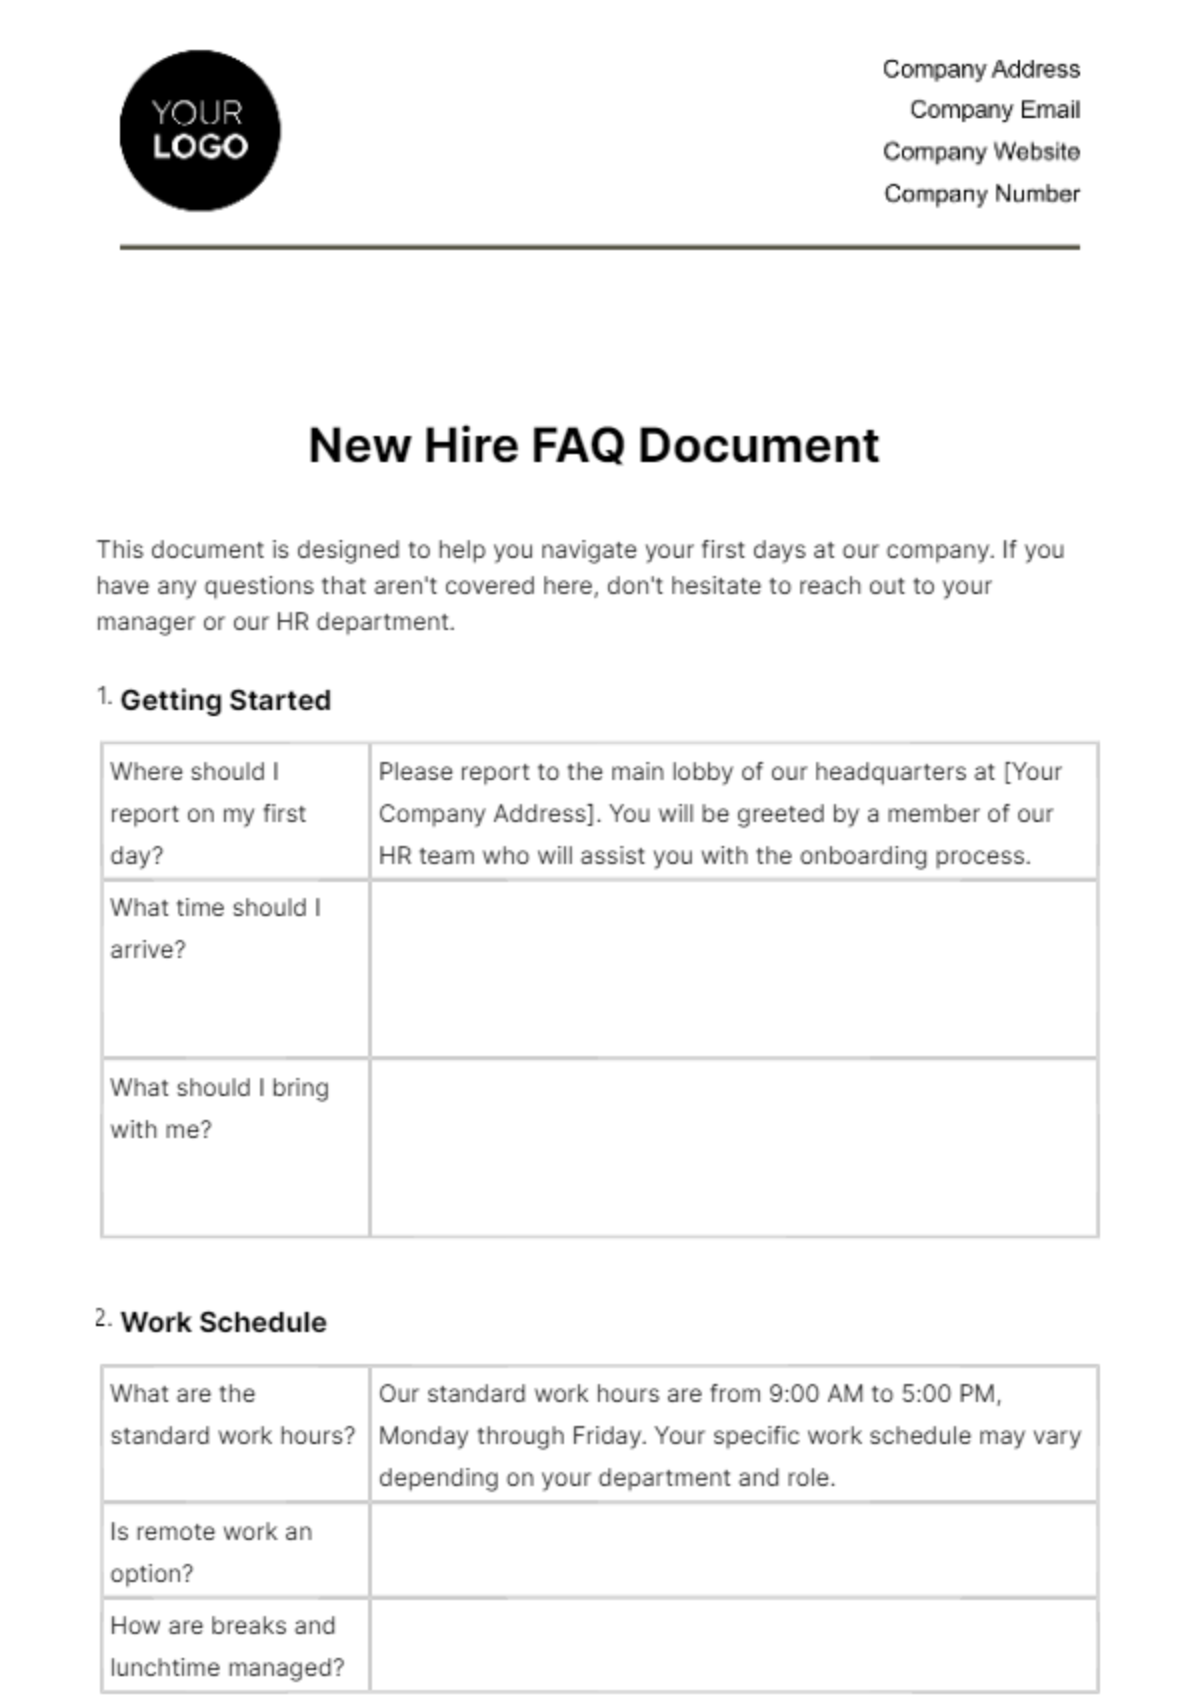 Free New Hire FAQ Document HR Template